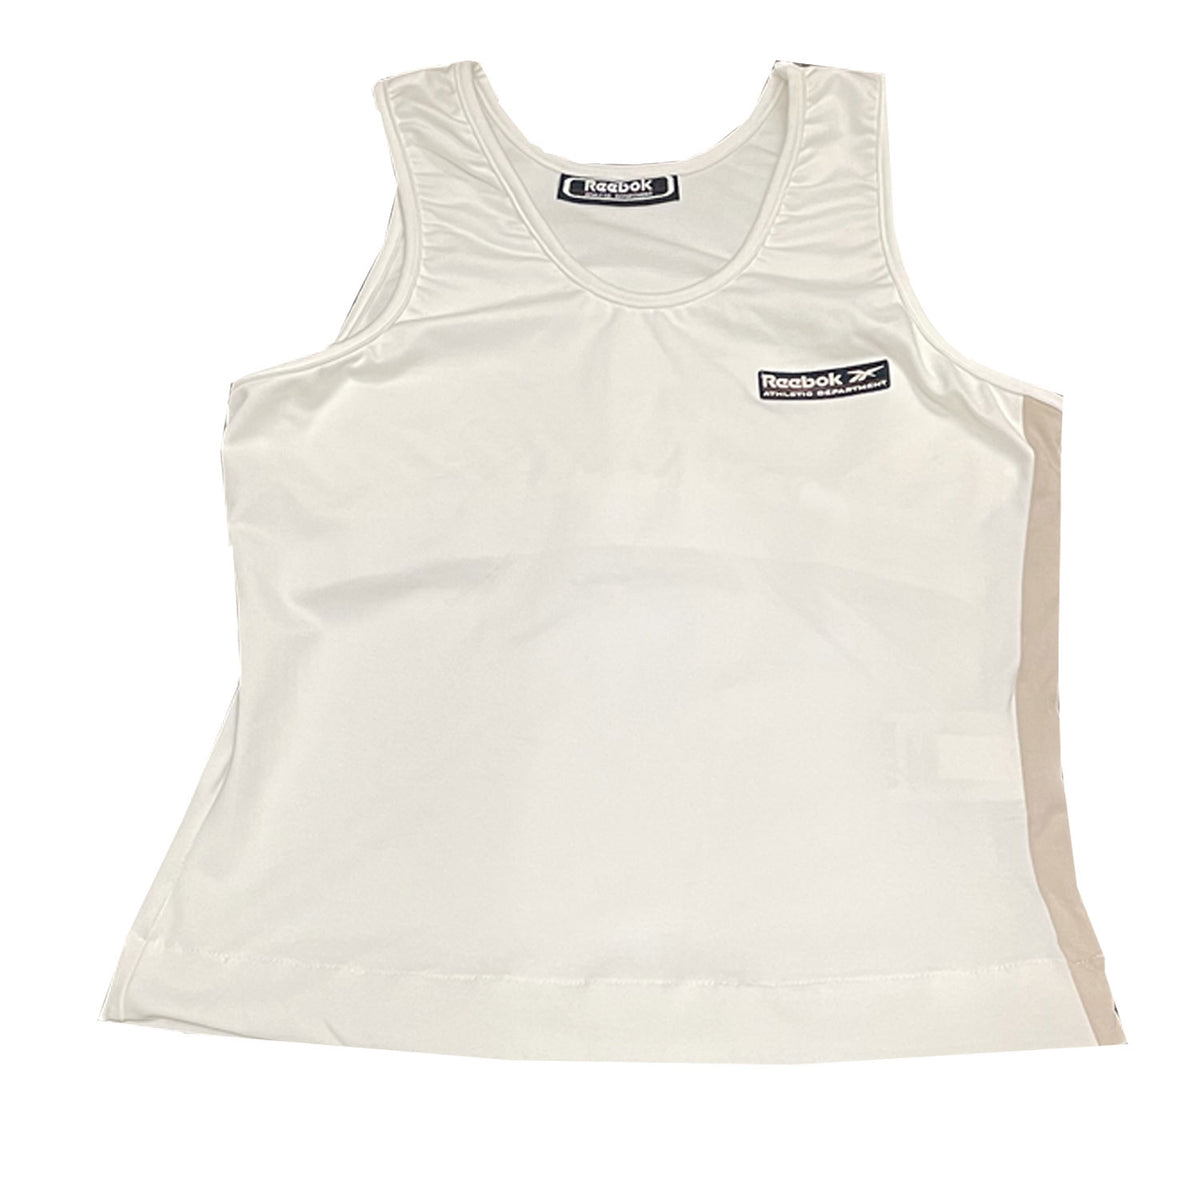 Reebok Womens Athletic Sports Vest - White - UK Size 12